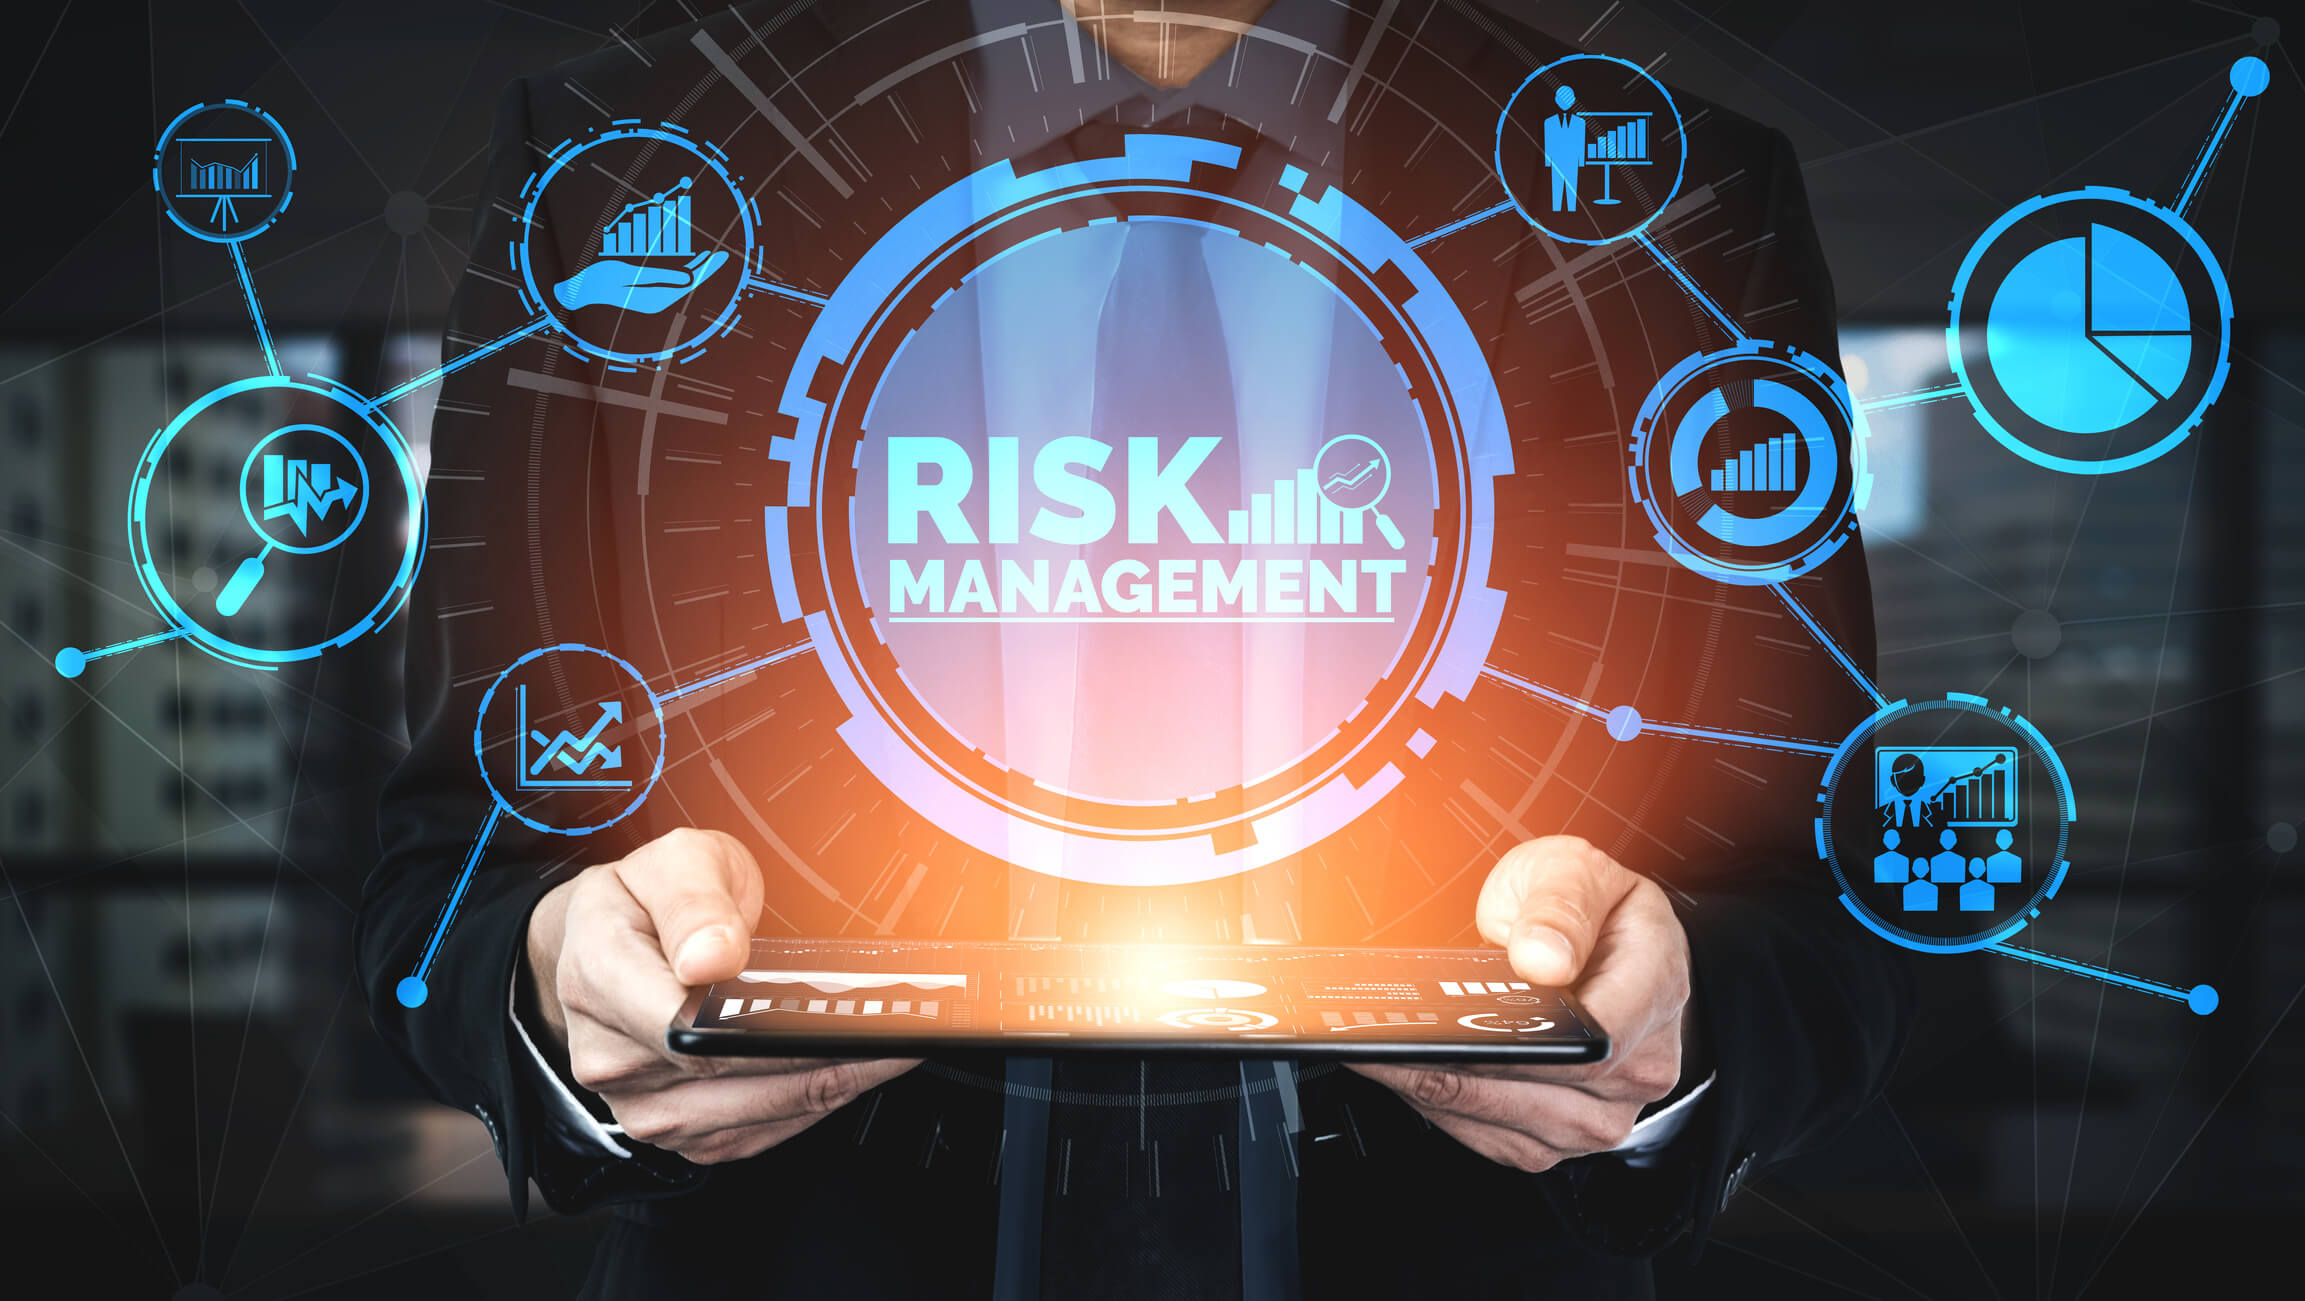 Financial Risks Management - Complete Controller